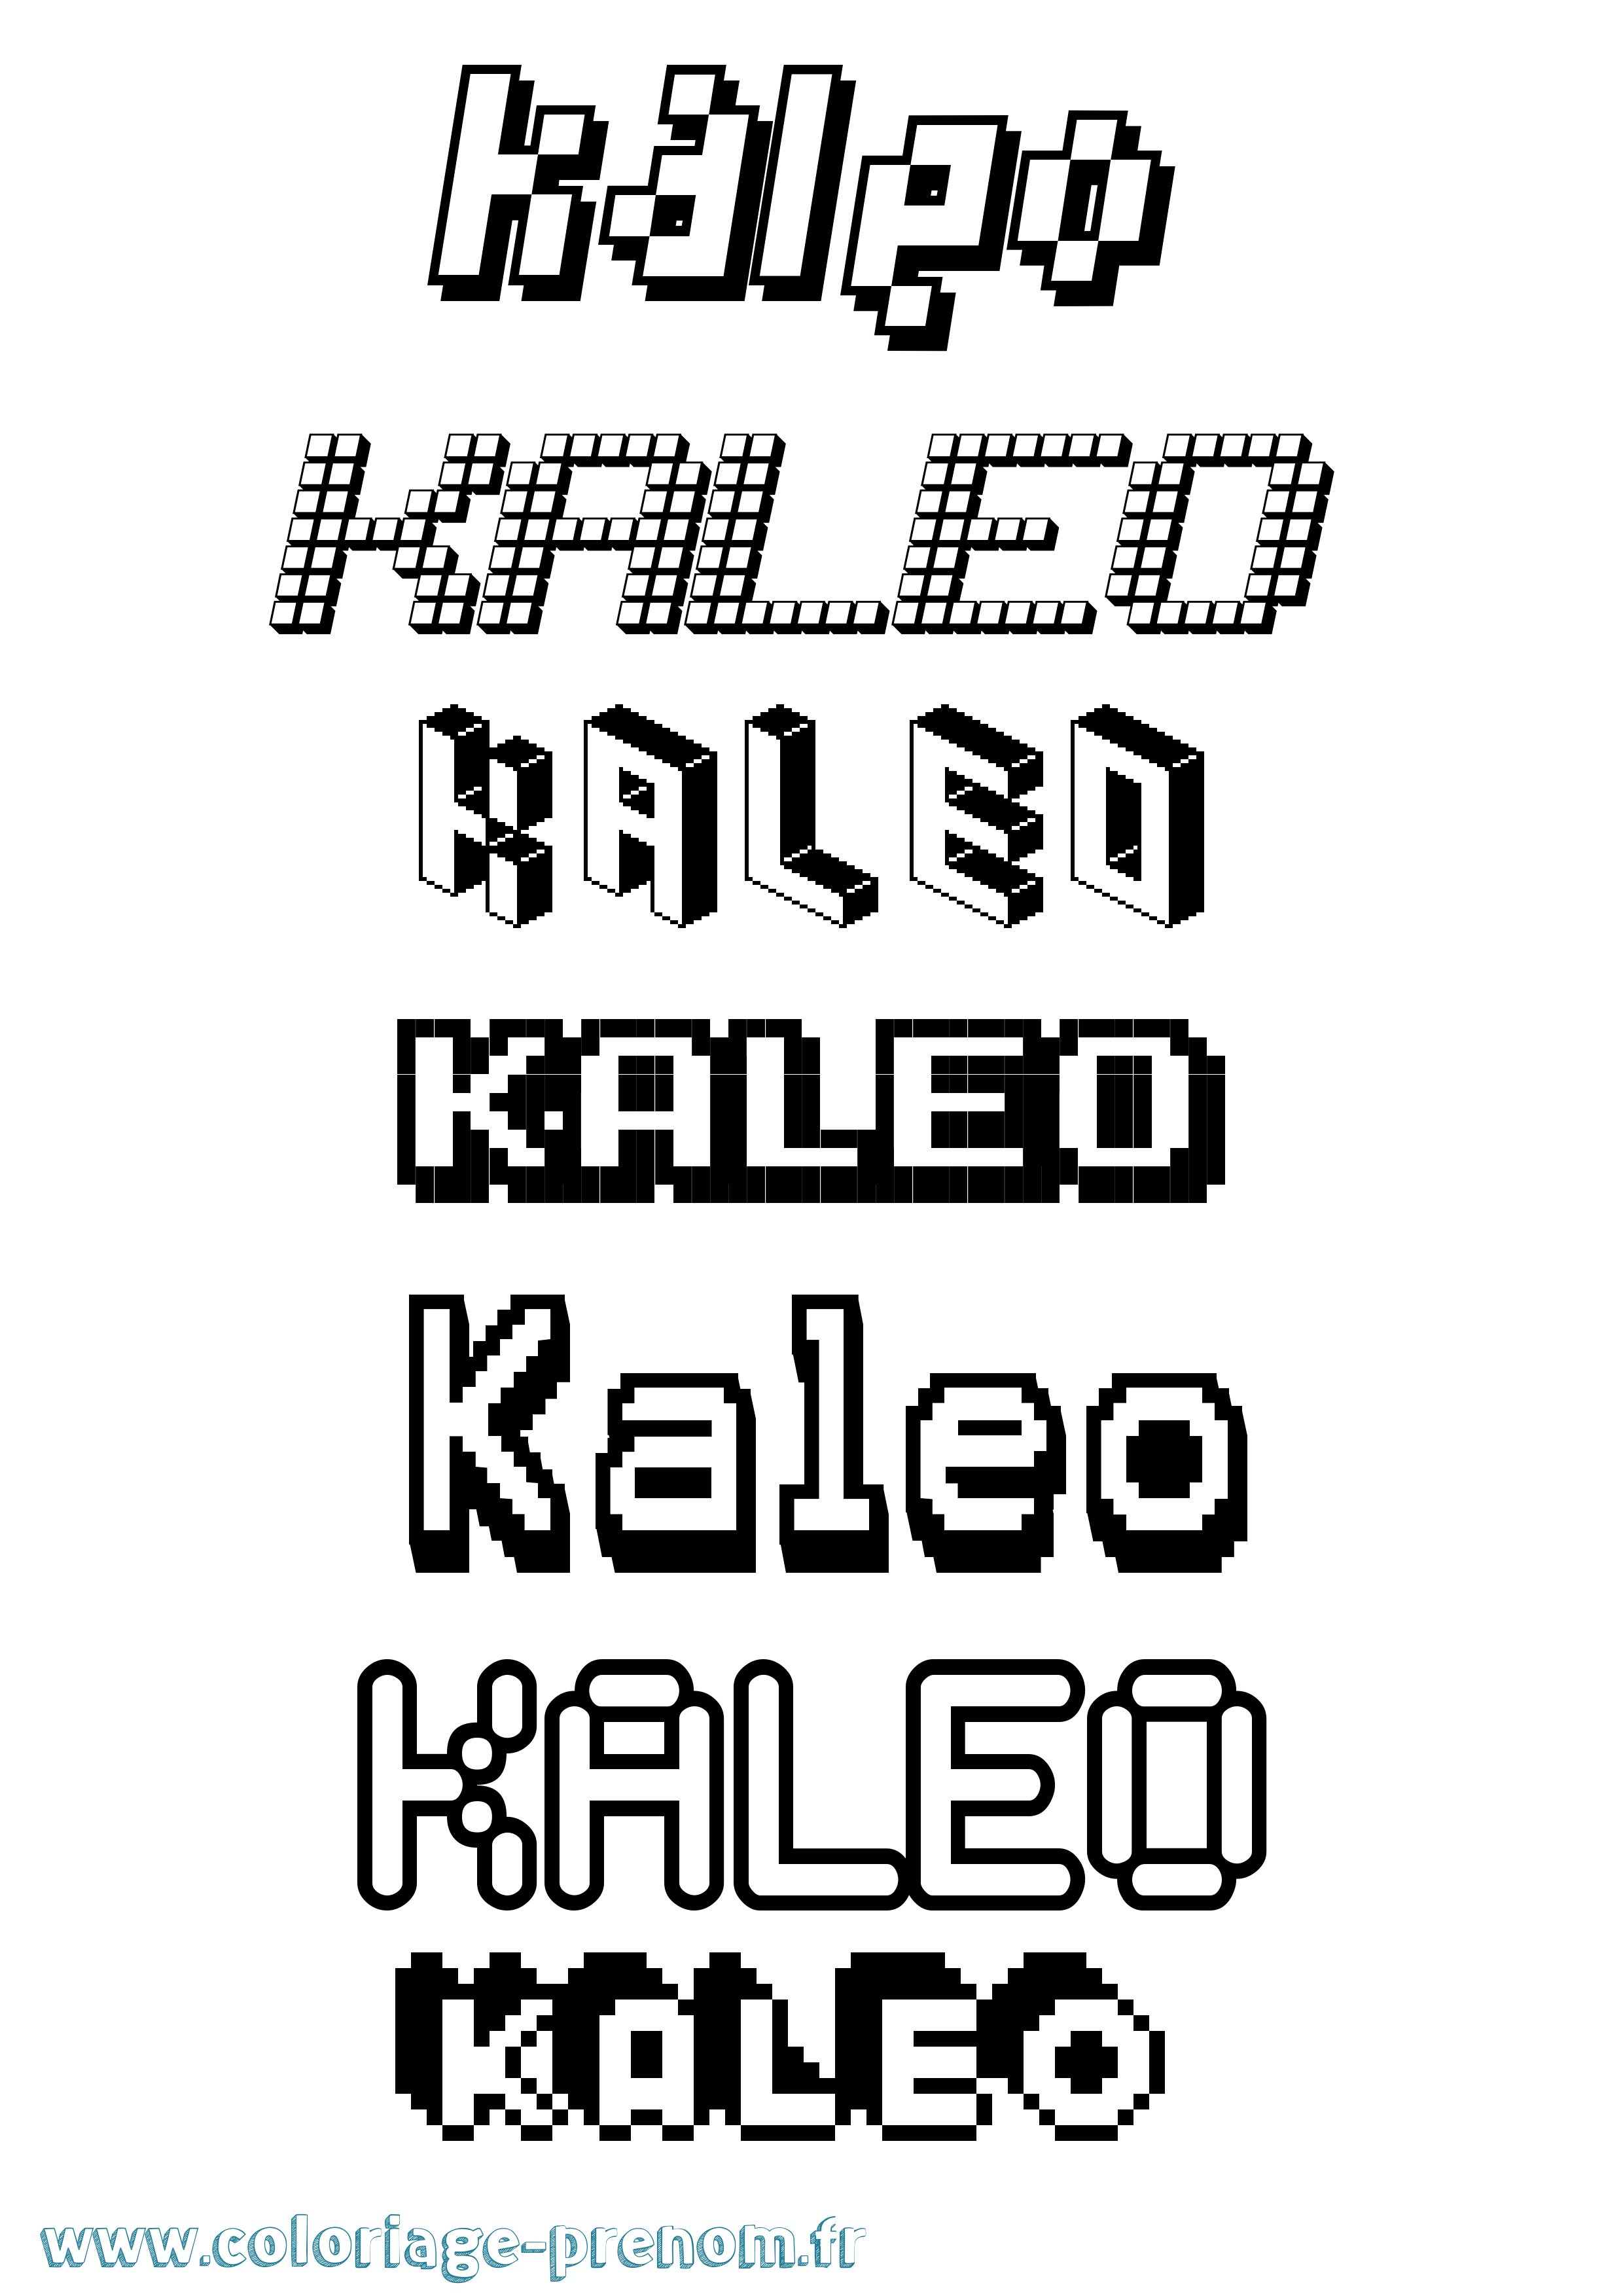 Coloriage prénom Kaleo Pixel